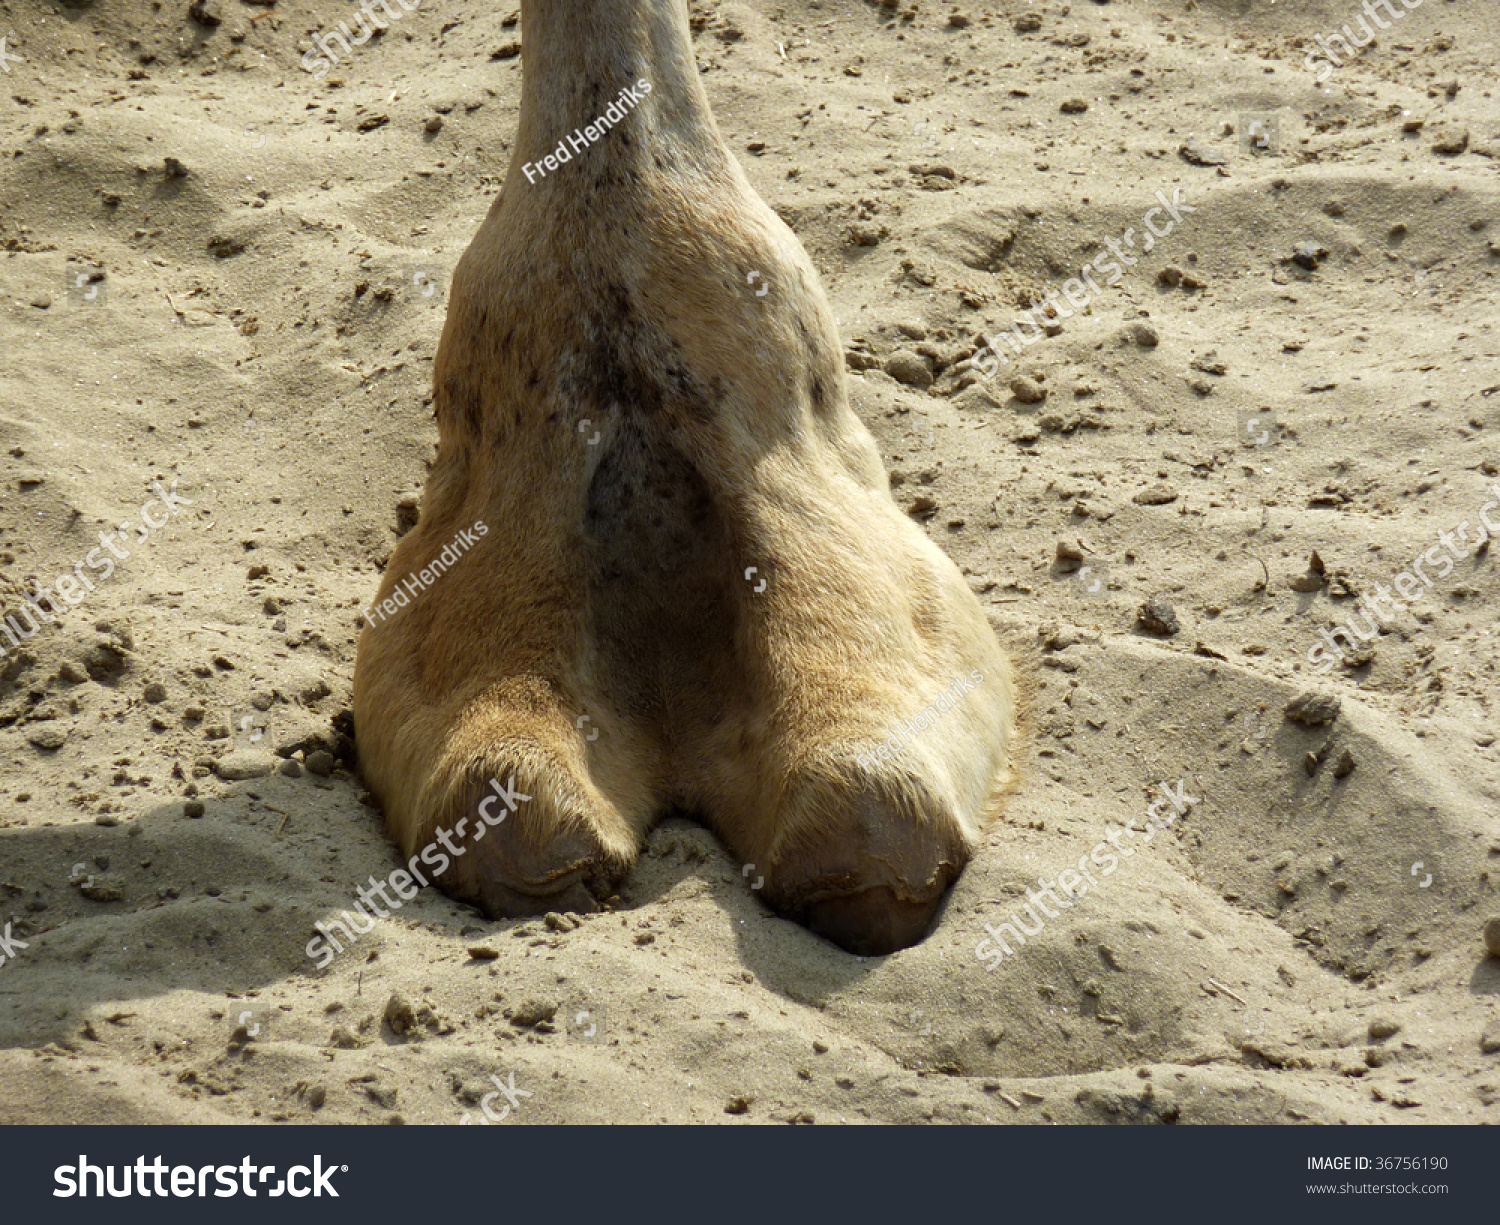 Camel Toe Images